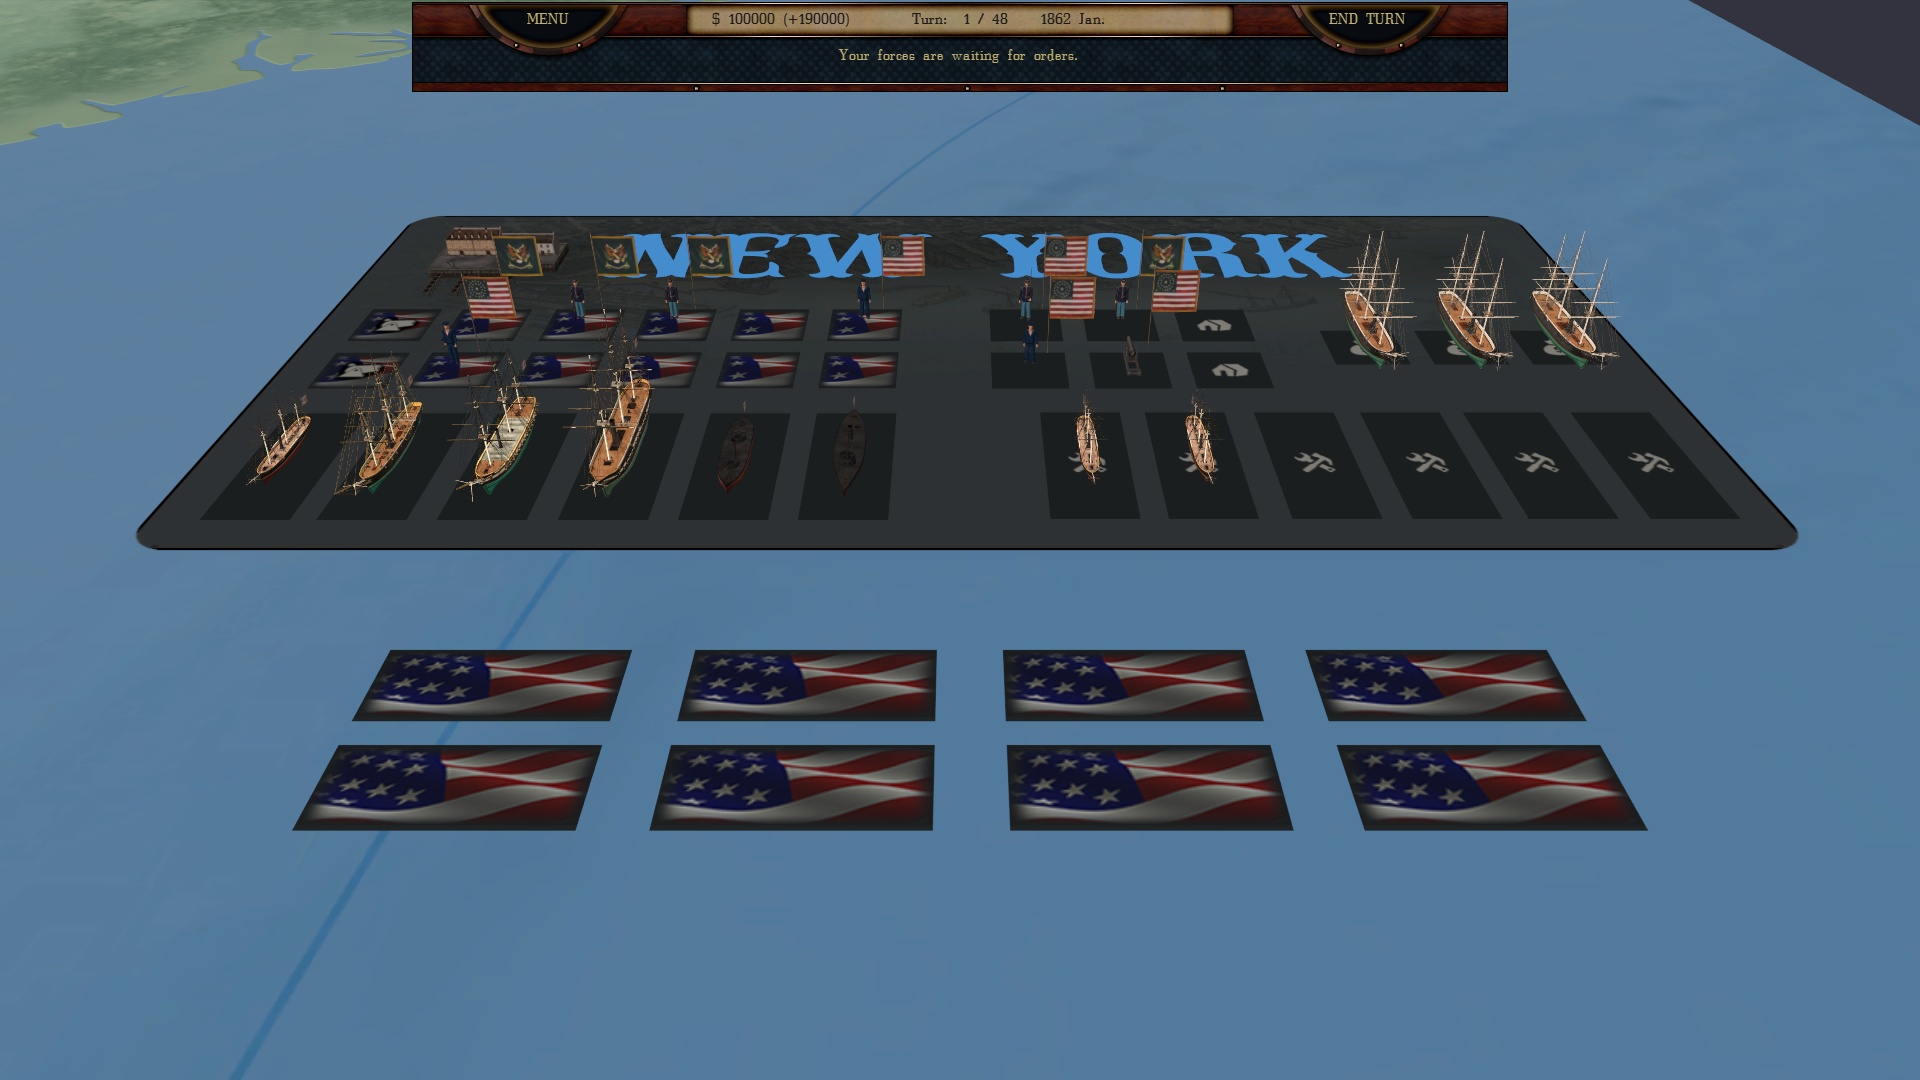 Ironclads 2: American Civil War screenshot